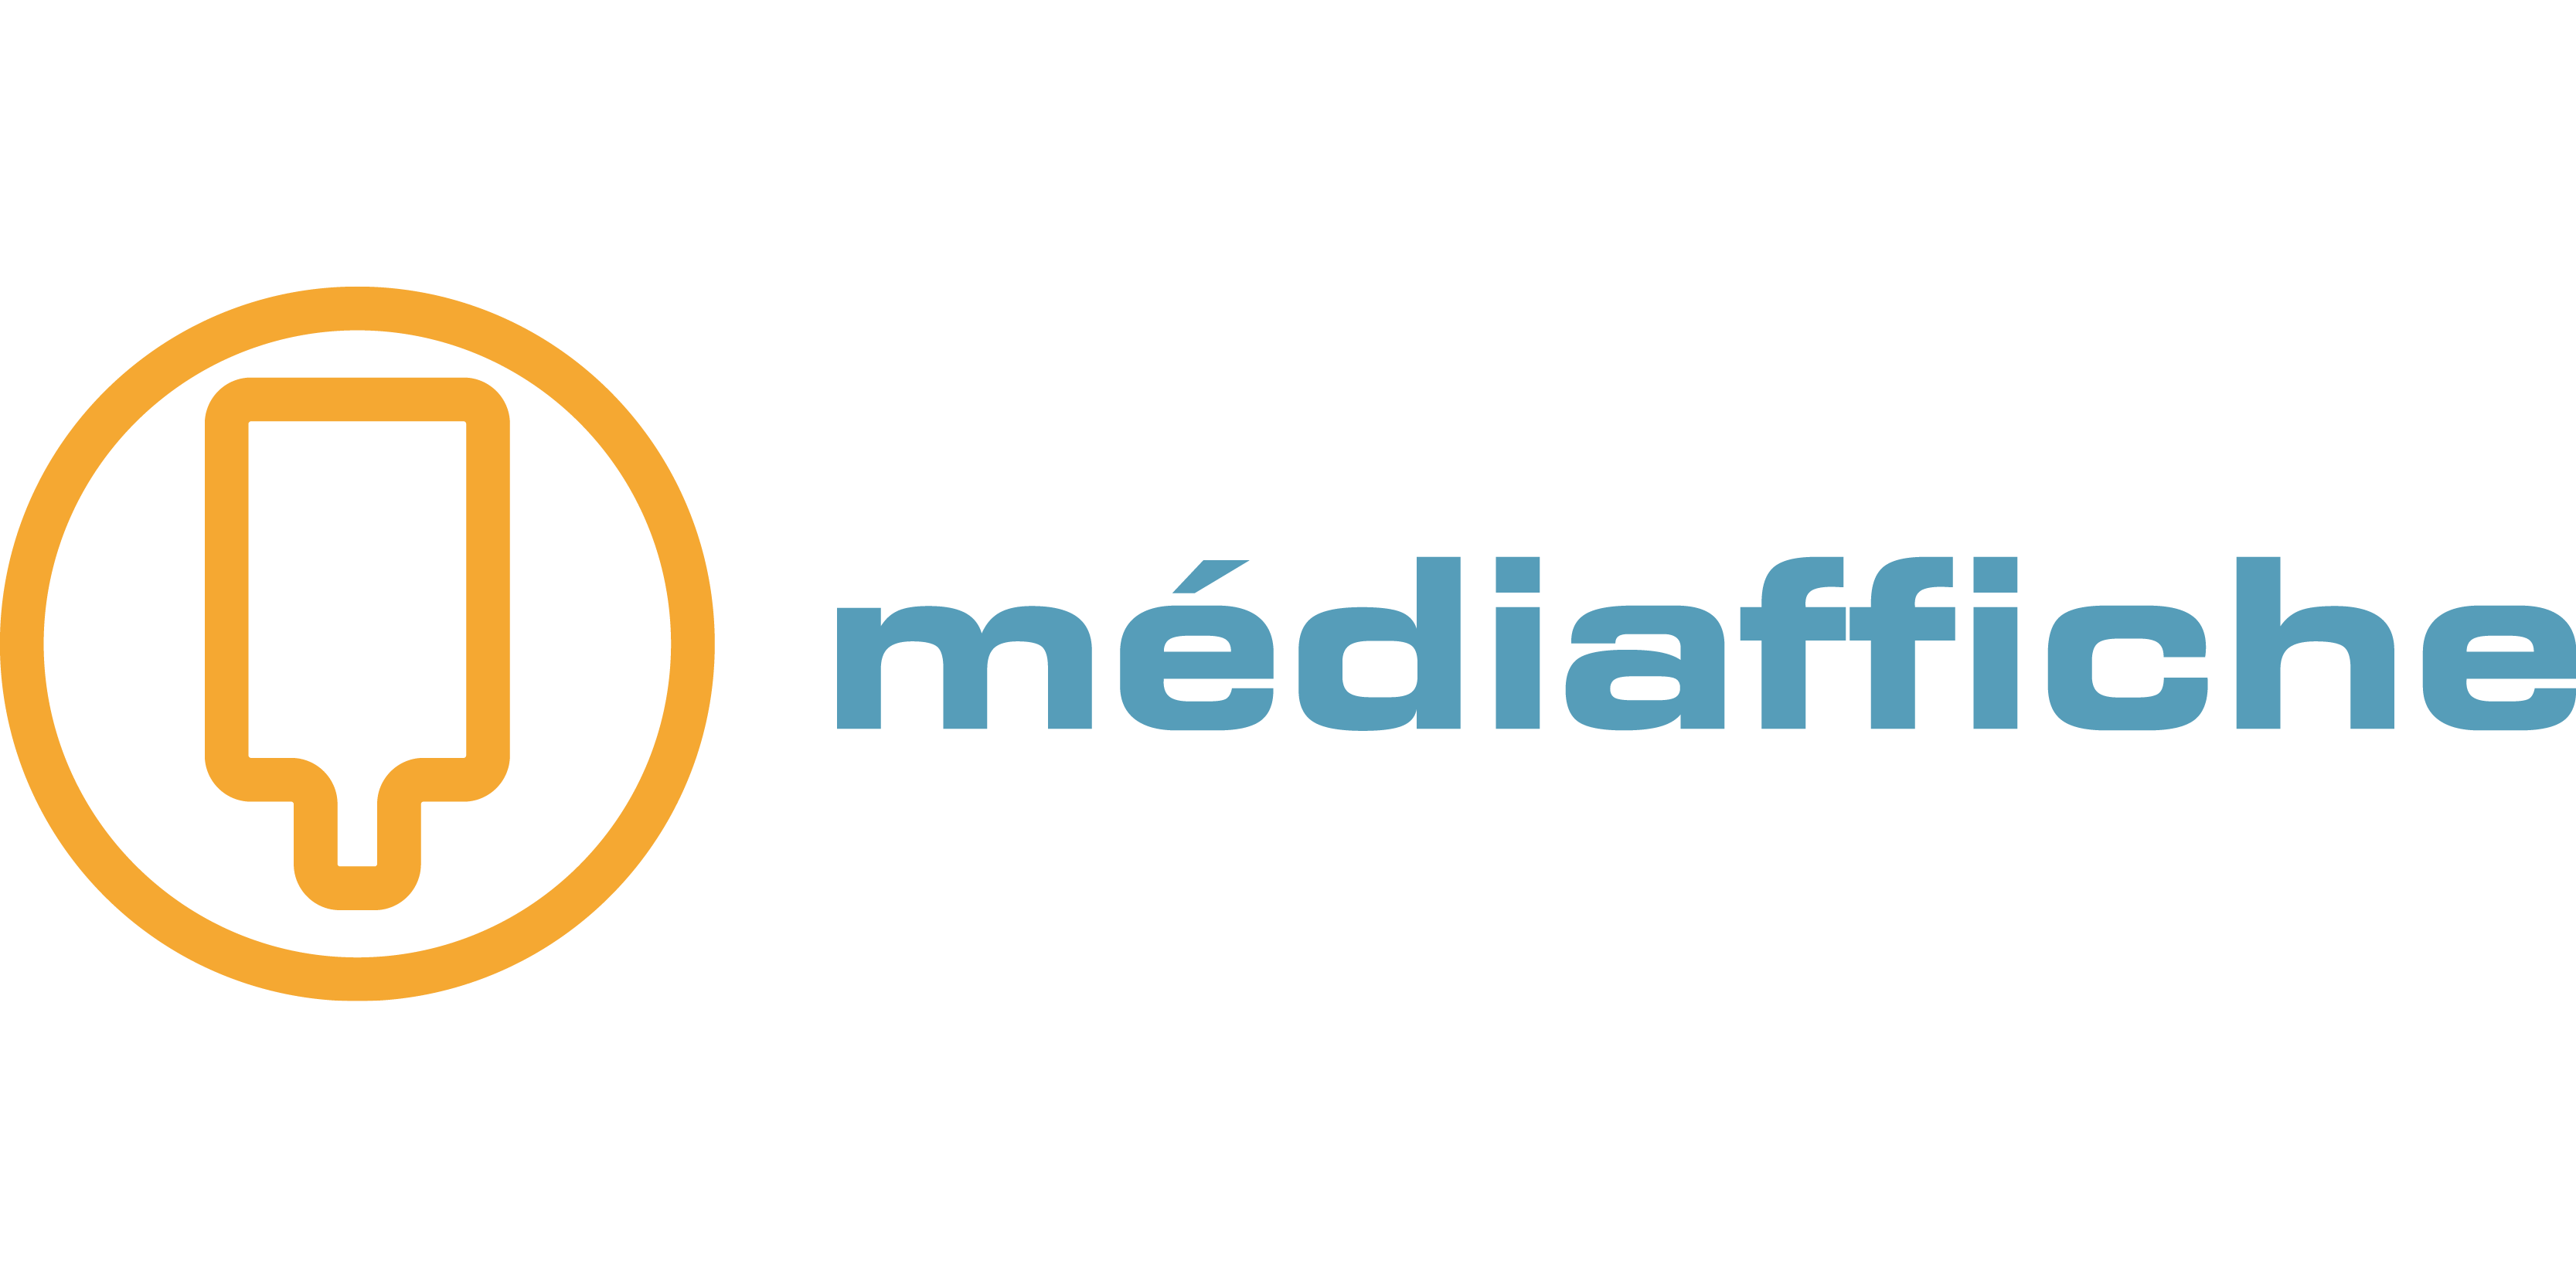 006_Mediaffiche (logo)_long